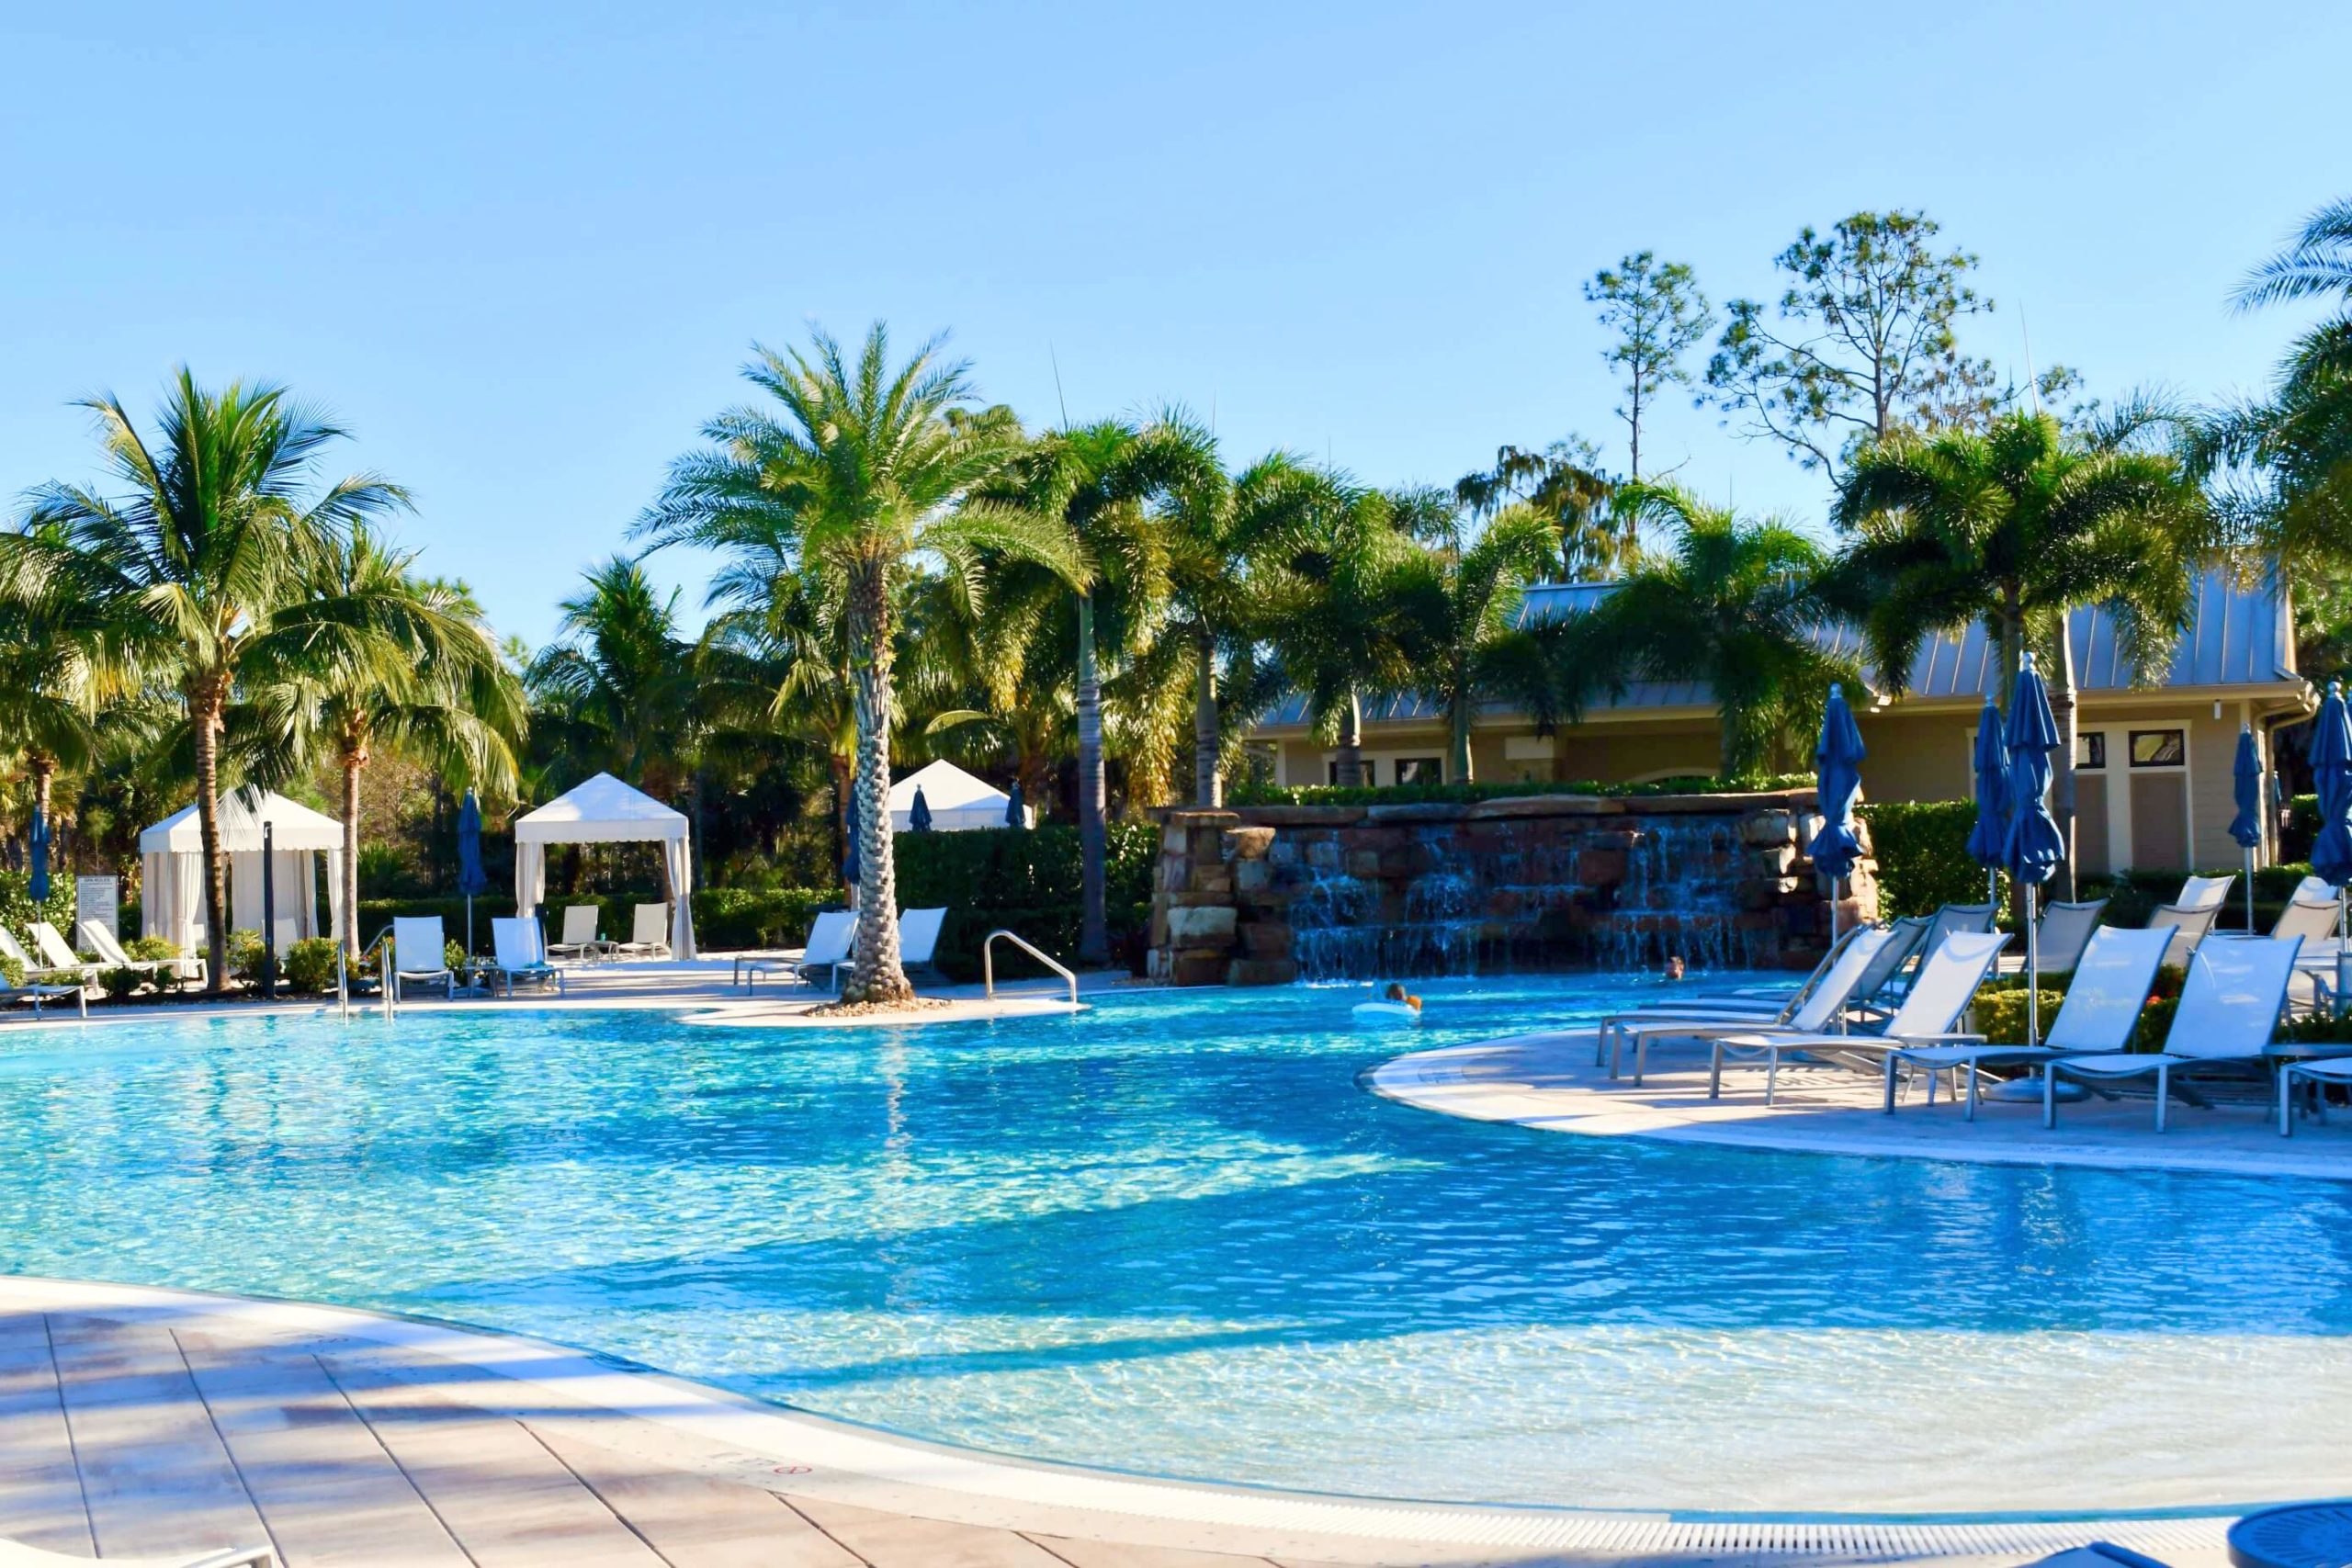 Beautiful resort-style pool with cabanas